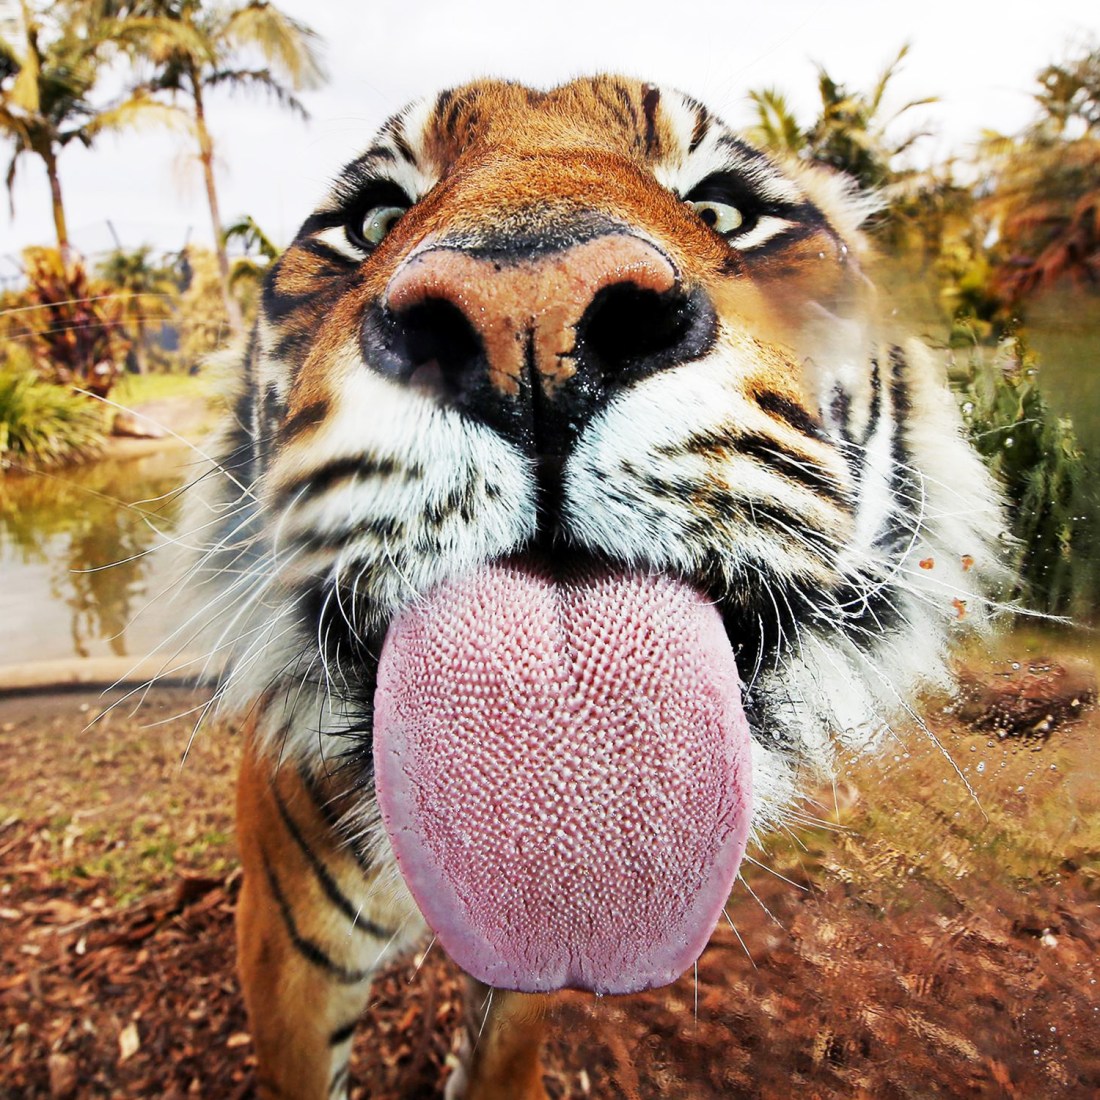 Tiger tongue